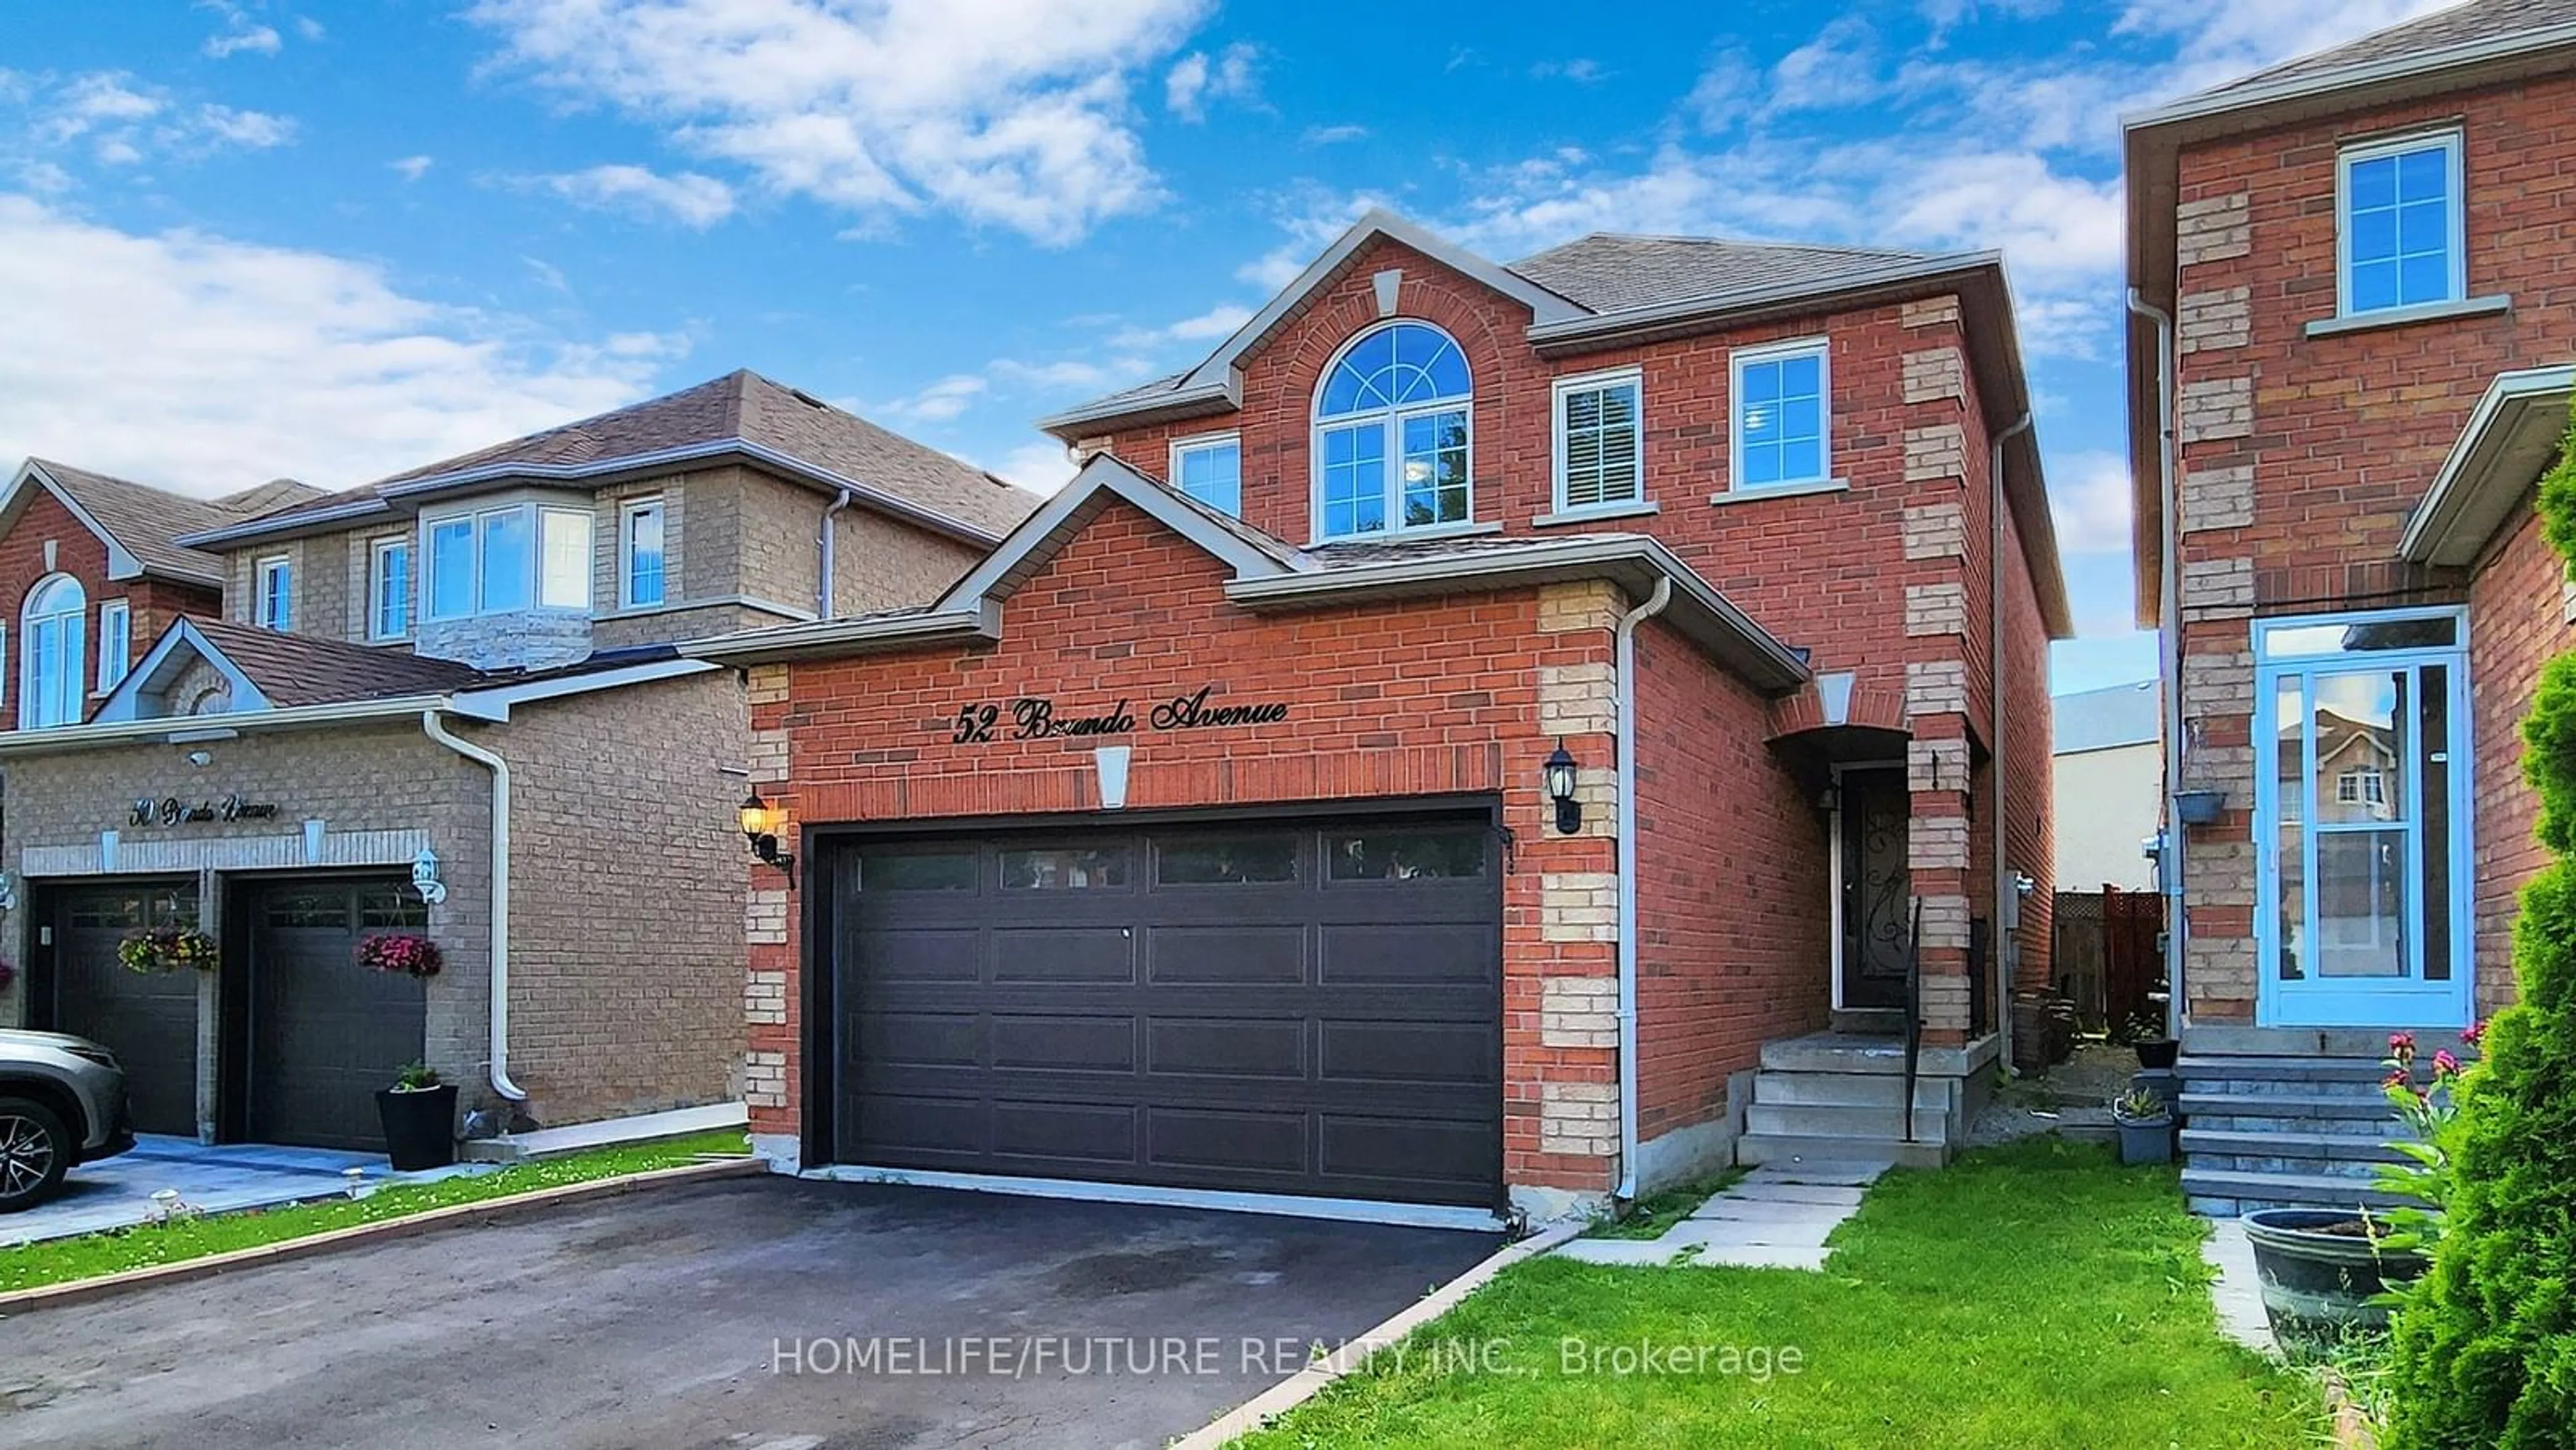 Home with brick exterior material for 52 Brando Ave, Markham Ontario L3S 4K9